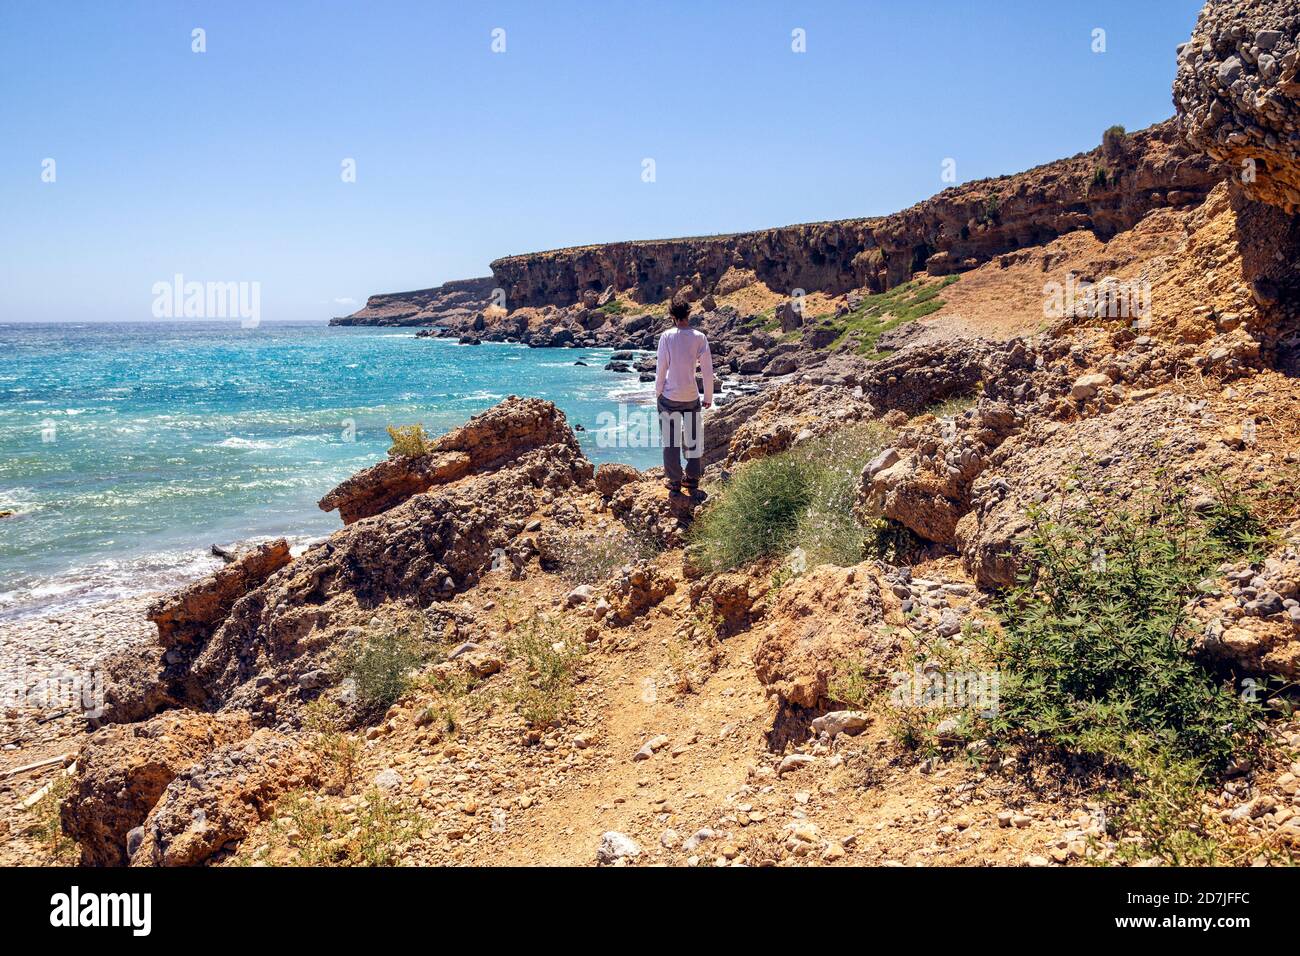 Man admiring view while standing on beach at Plakias, Crete, Greece Stock Photo